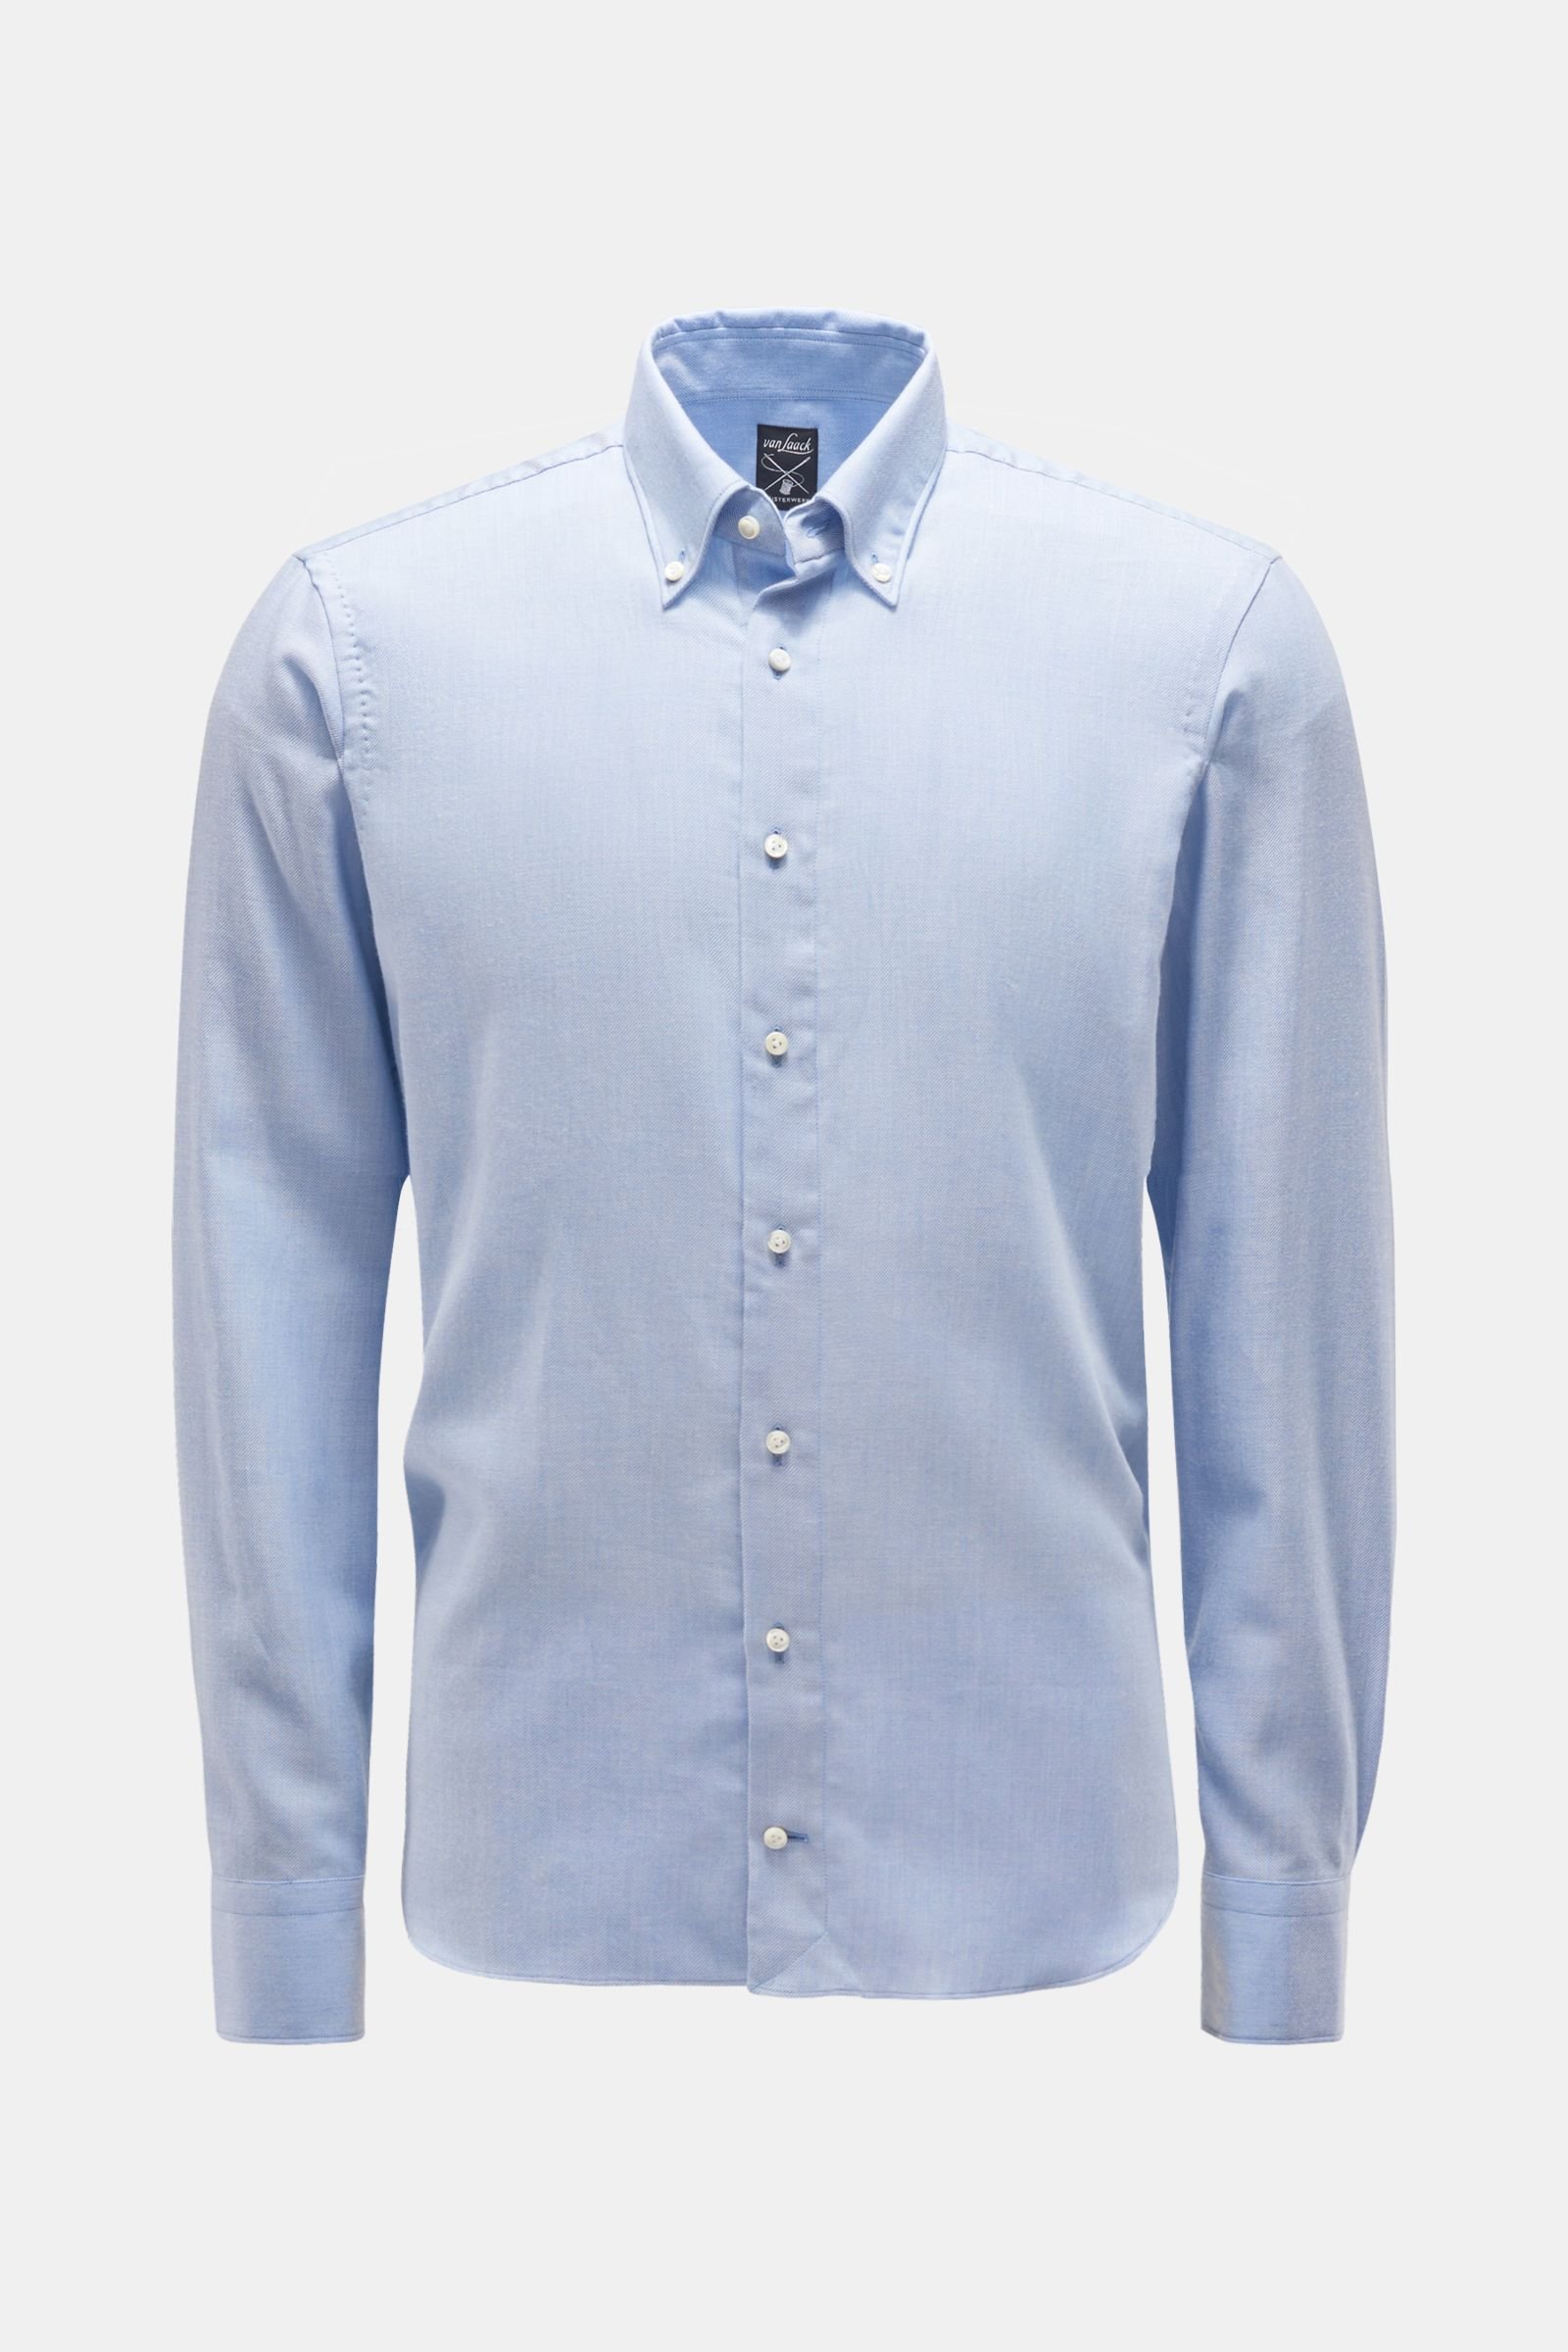 Flannel shirt 'Malon-LTFW' button-down collar light blue/white striped